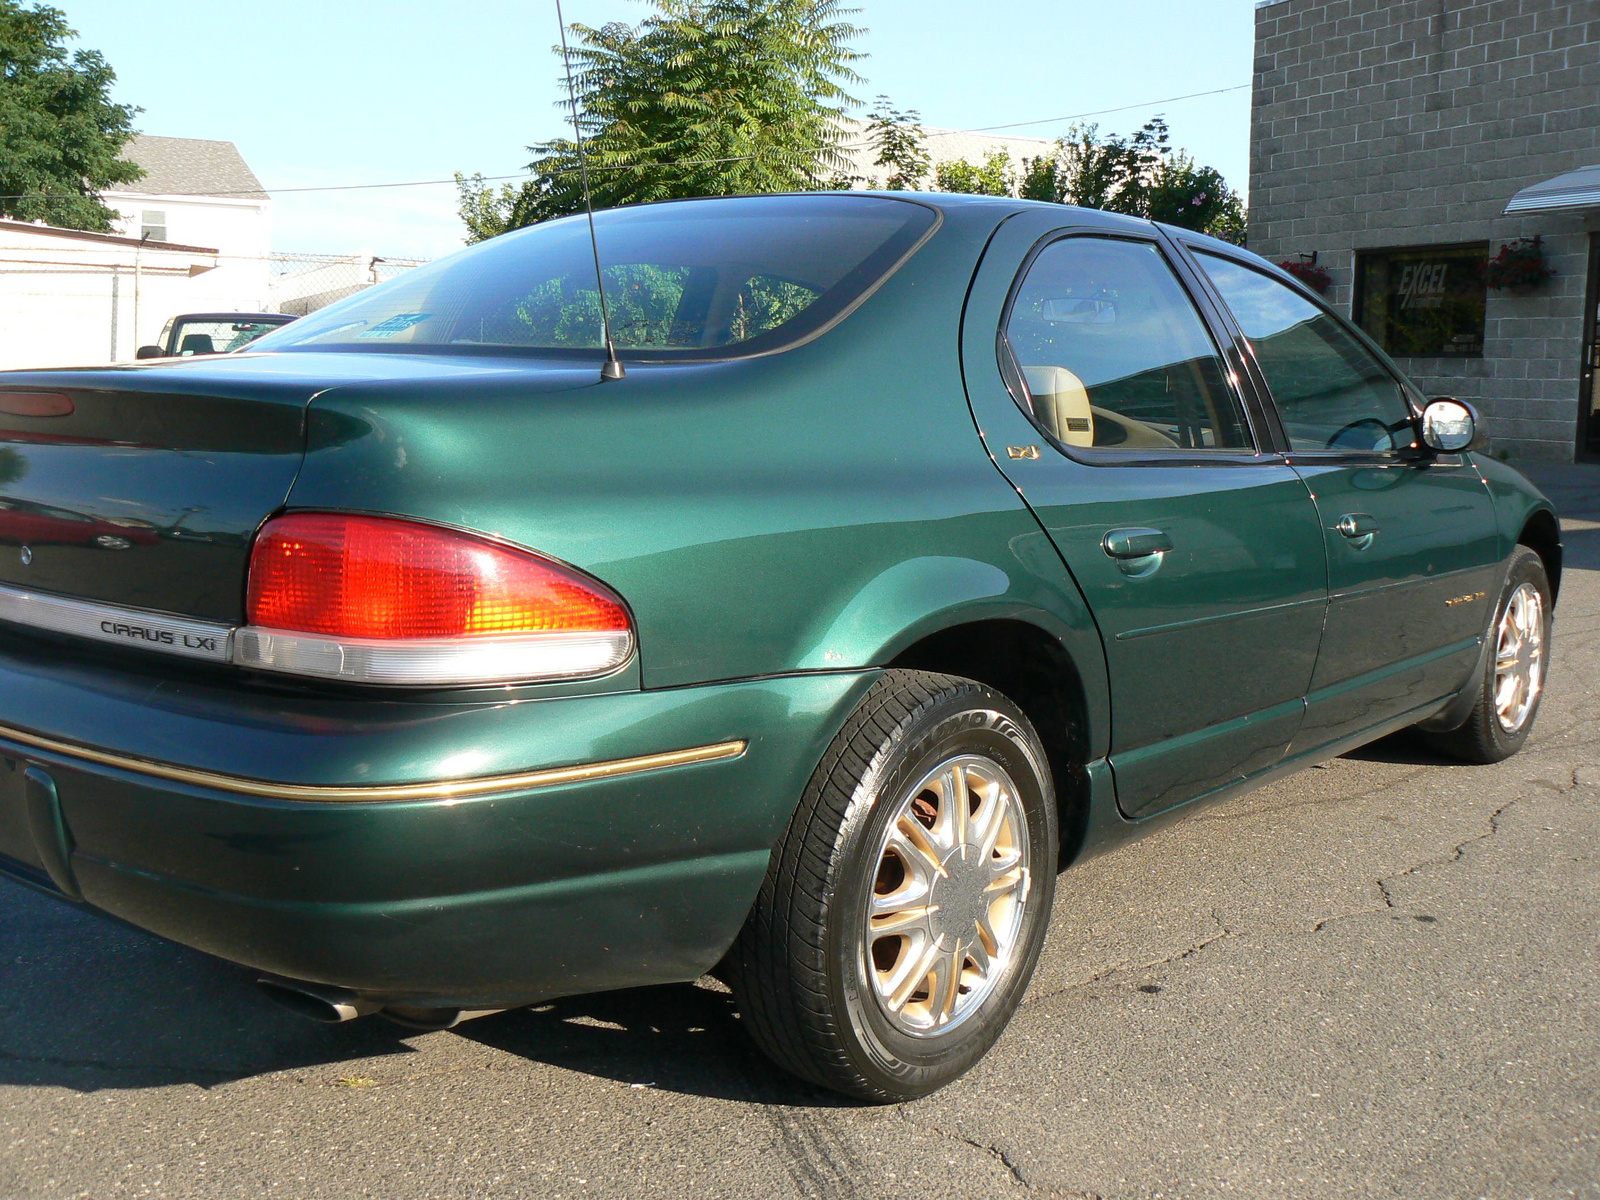 1998 Chrysler intrepid sedan review #4